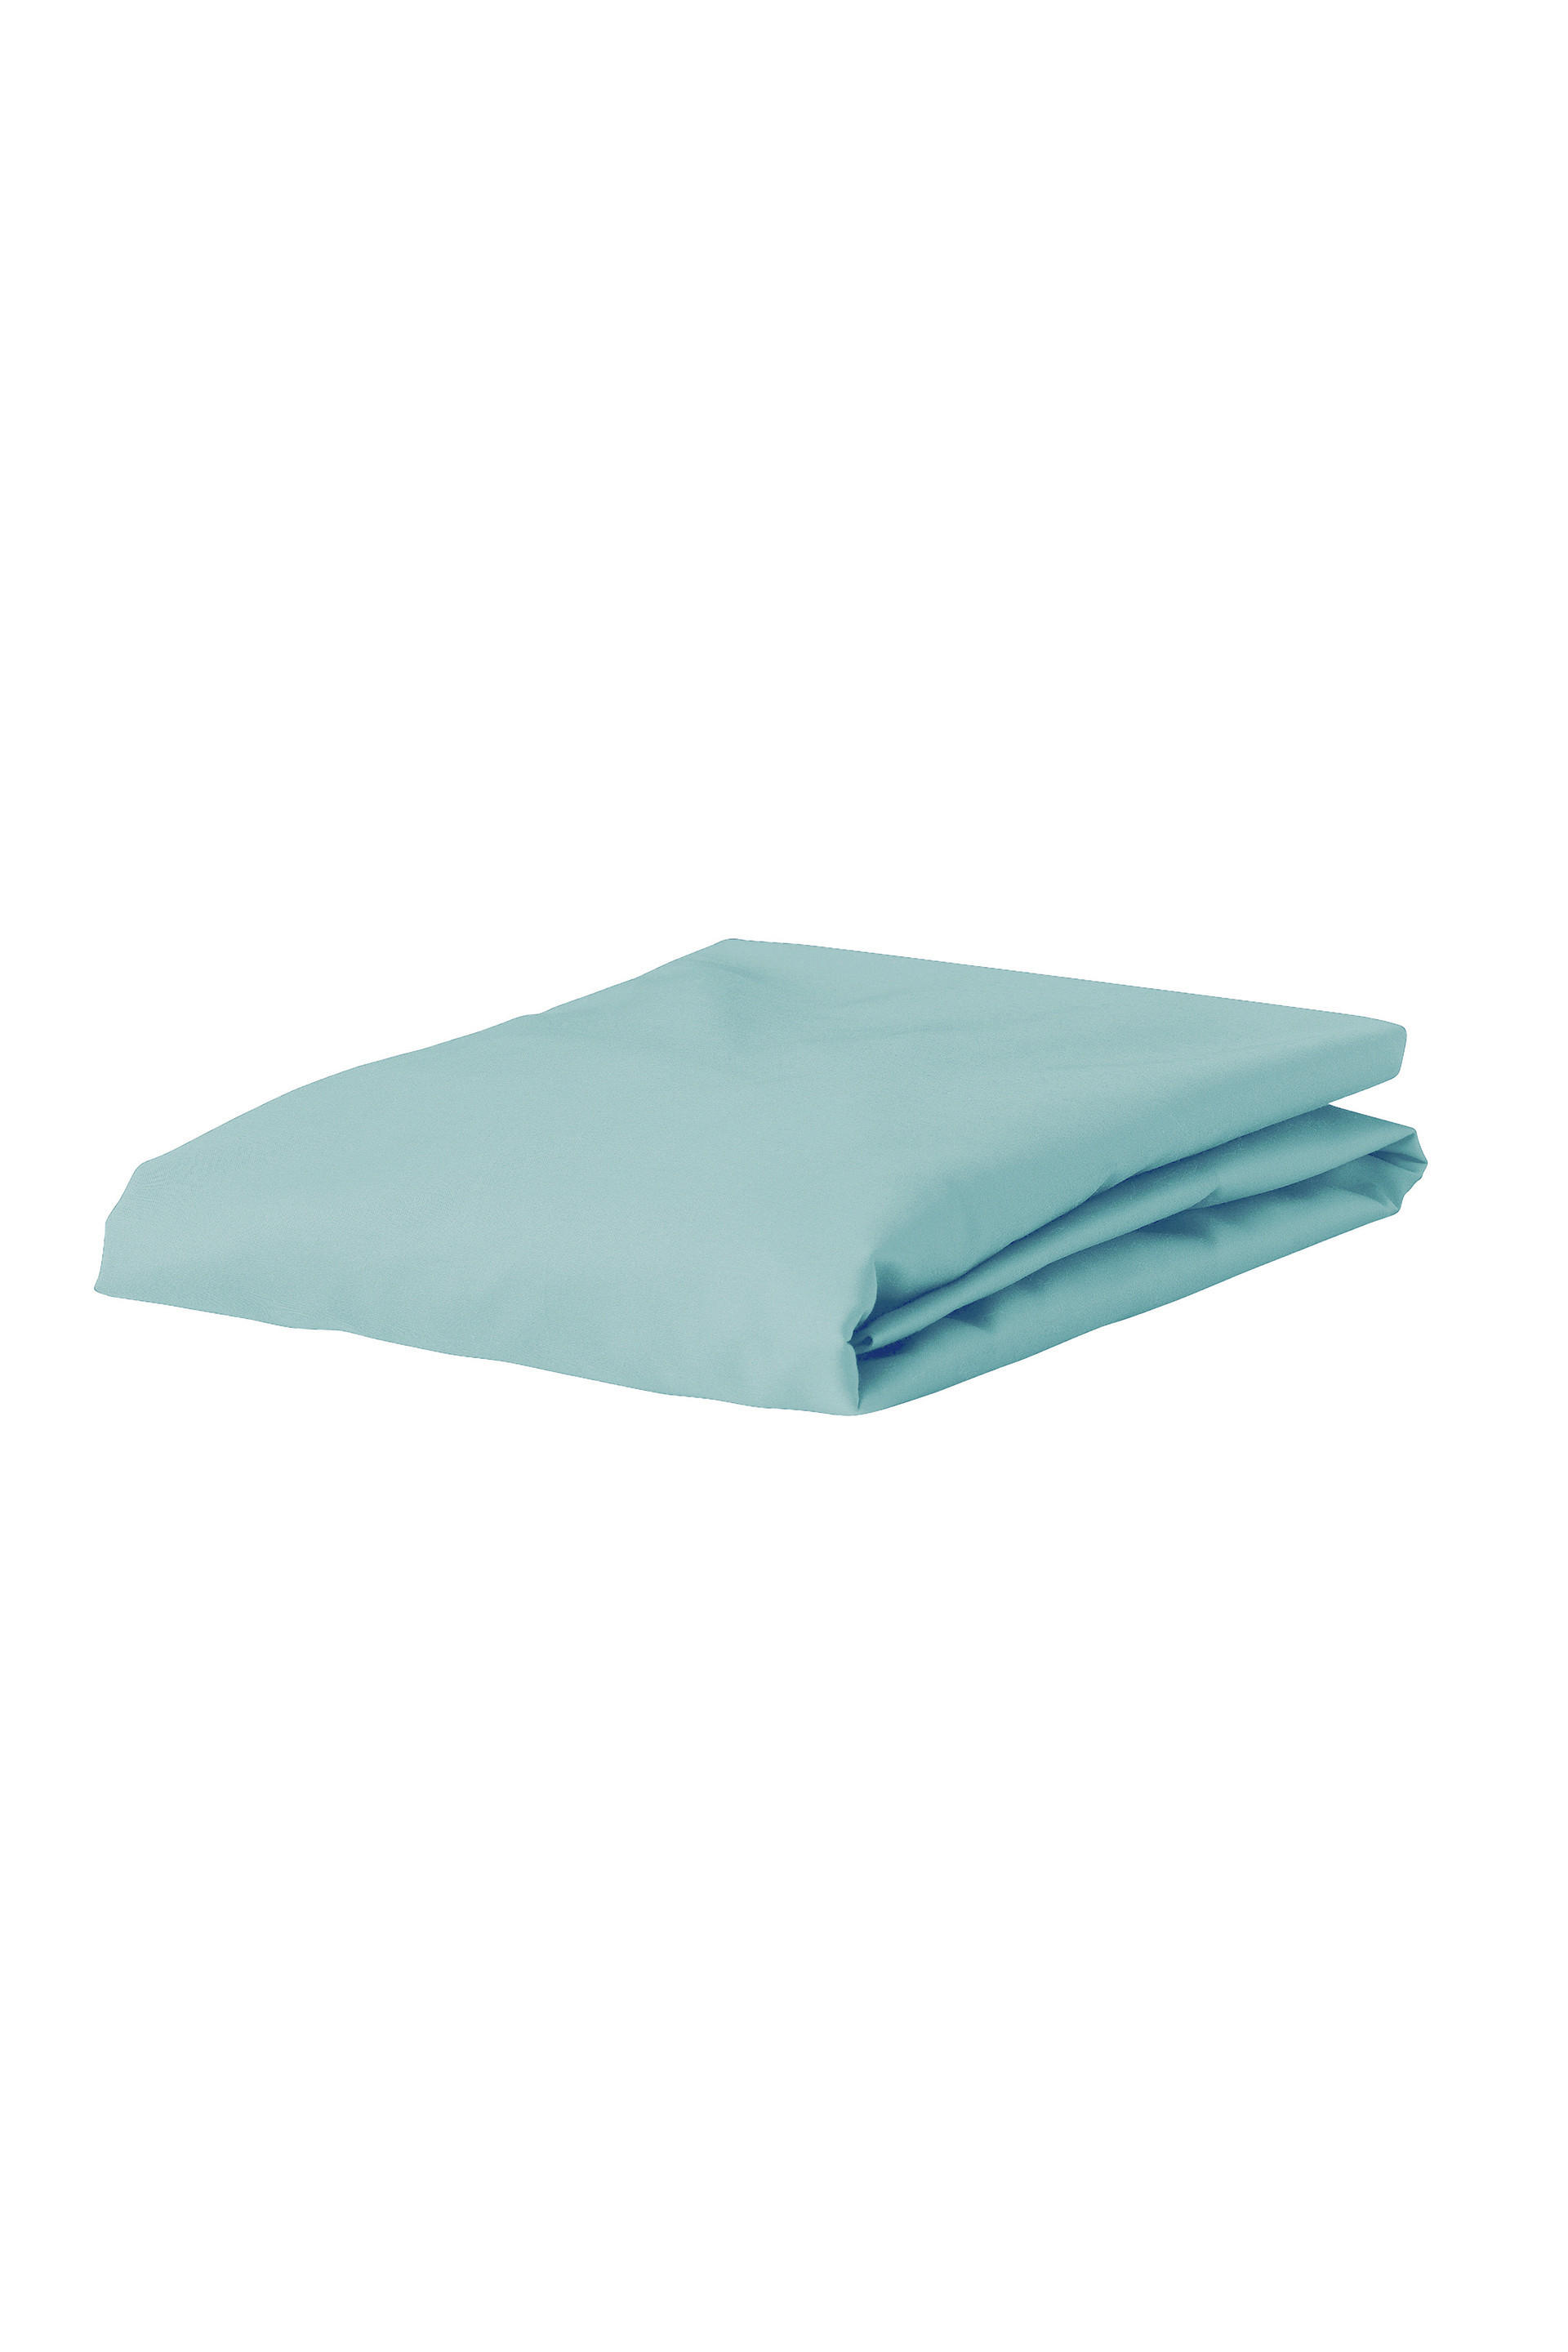 SPANNBETTTUCH E-Sheet Jersey  - Blau/Pastellblau, Basics, Textil (100/200cm) - Esprit